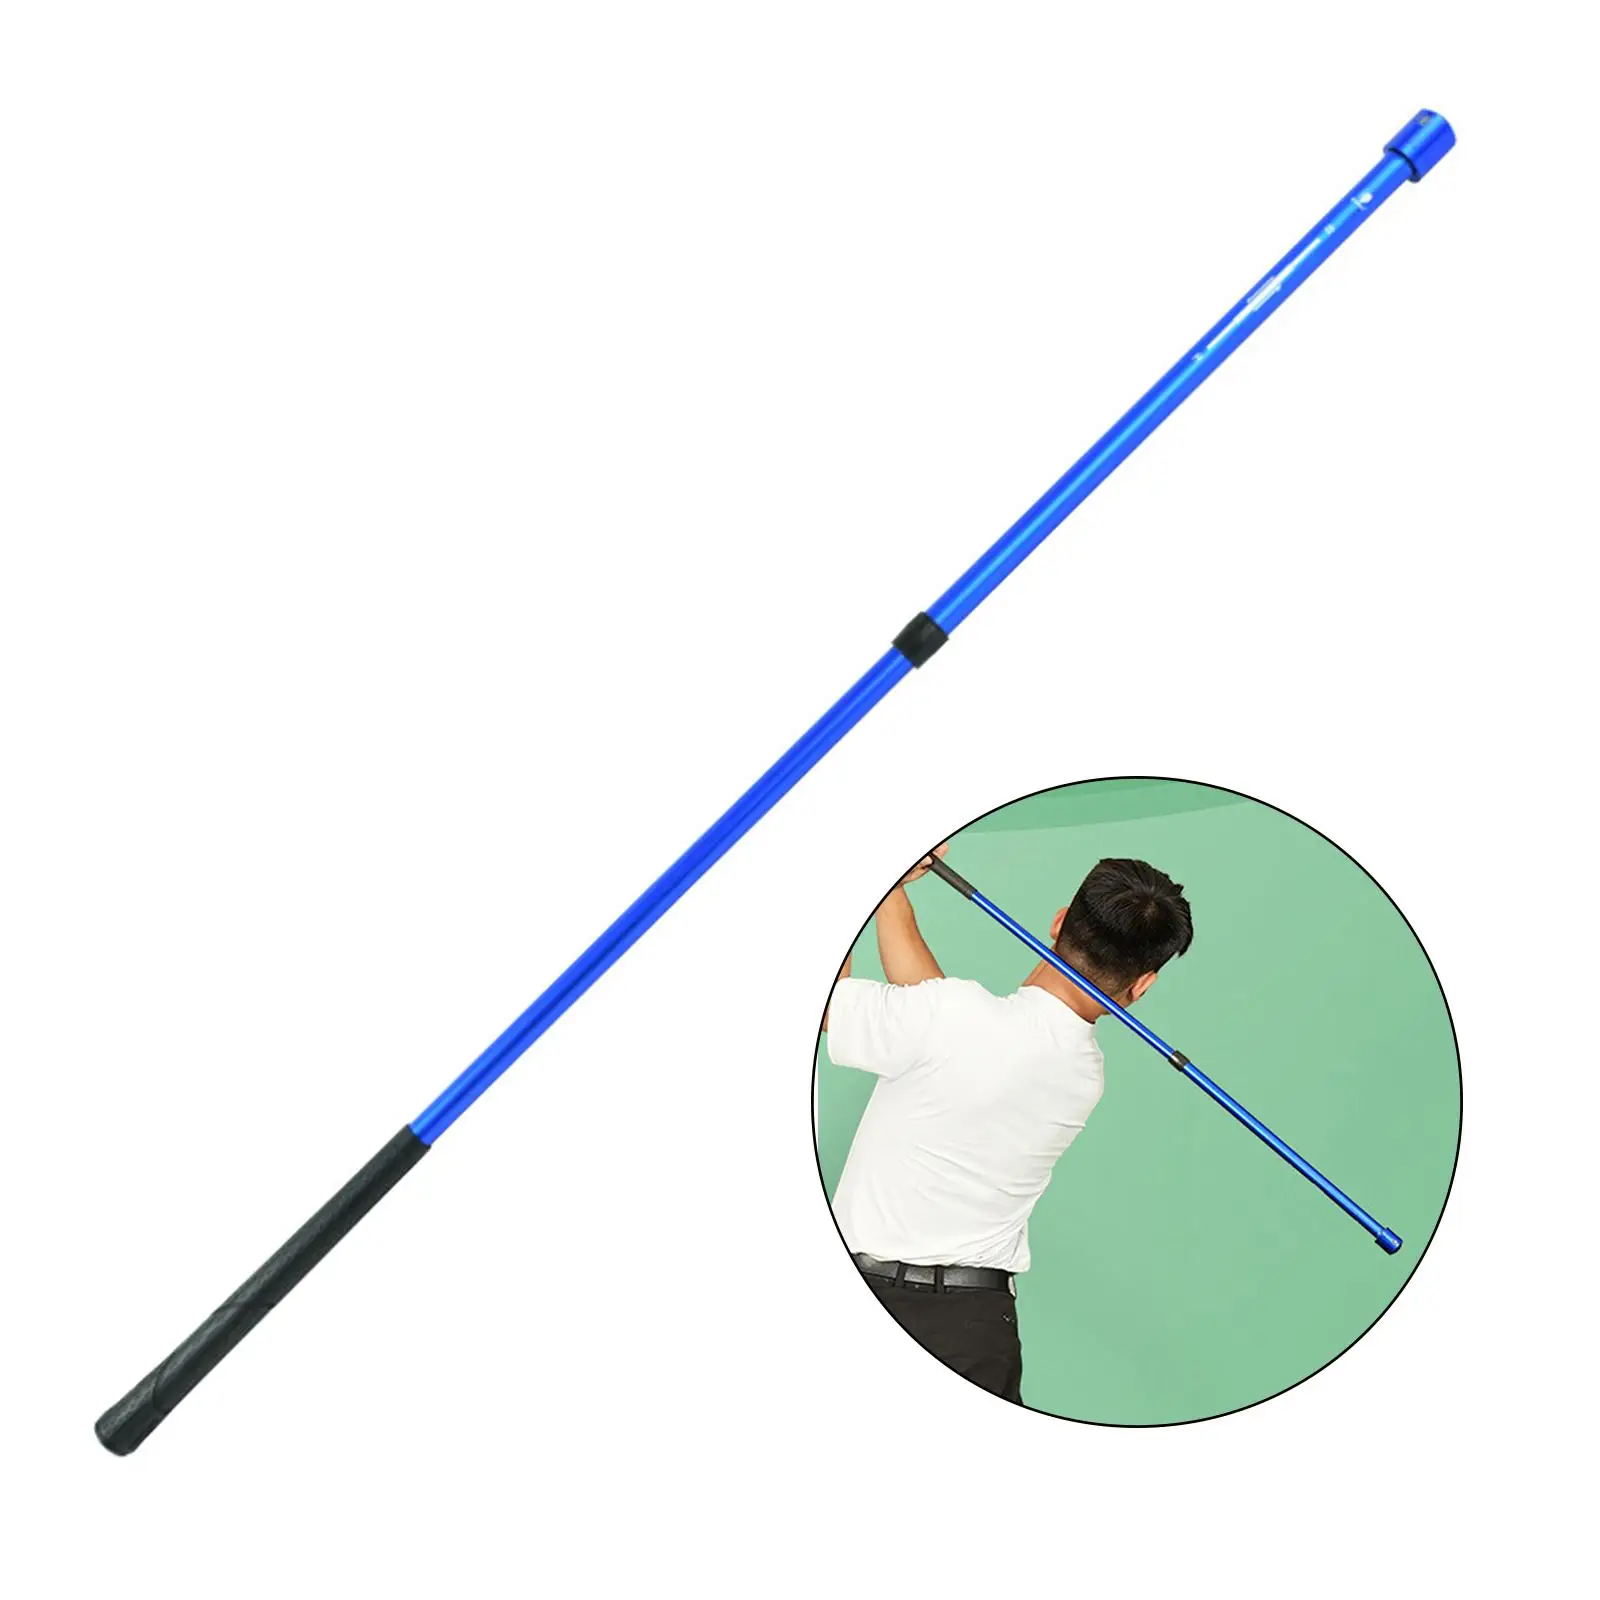 Golf Swing Trainer Aid Adjustable Exercise Equipment Practice Correct Posture